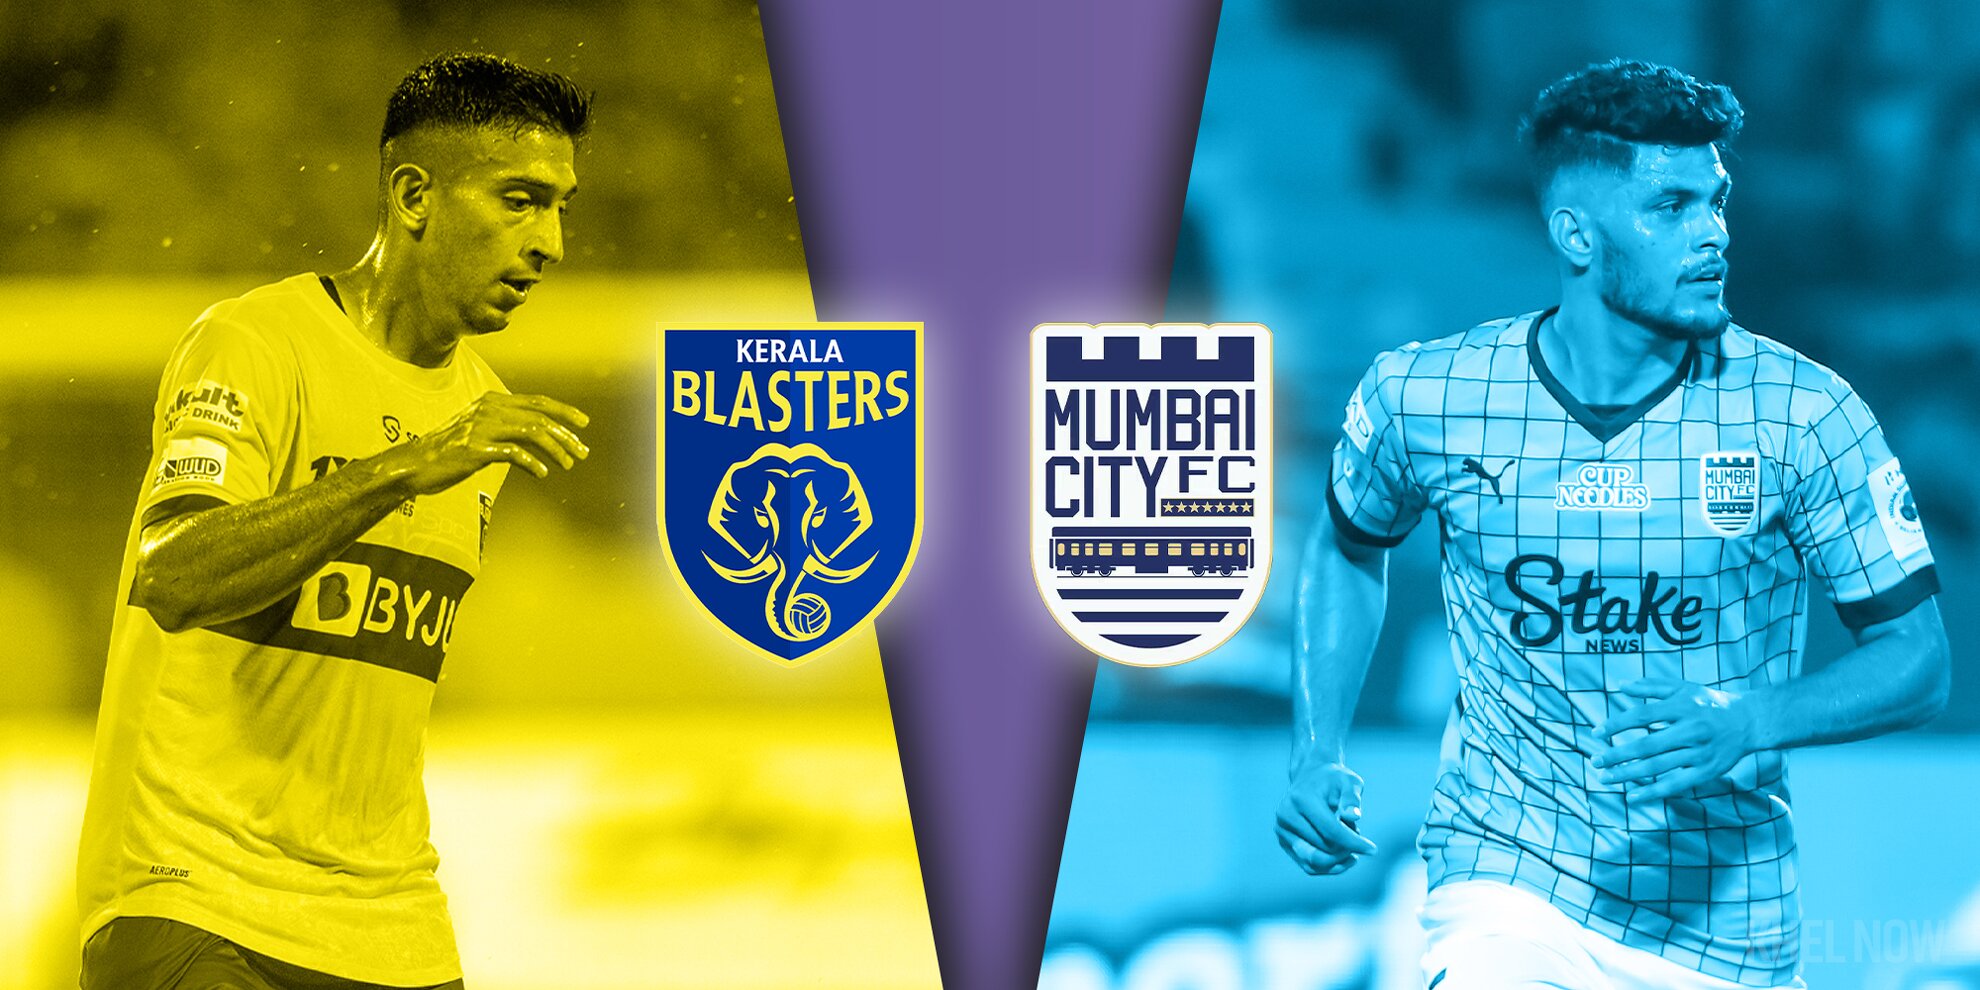 Negotiated match. Mumbai City FC. Kerala Blasters стадион. Месси 2023. ФИФА 2023 Мем турнир.